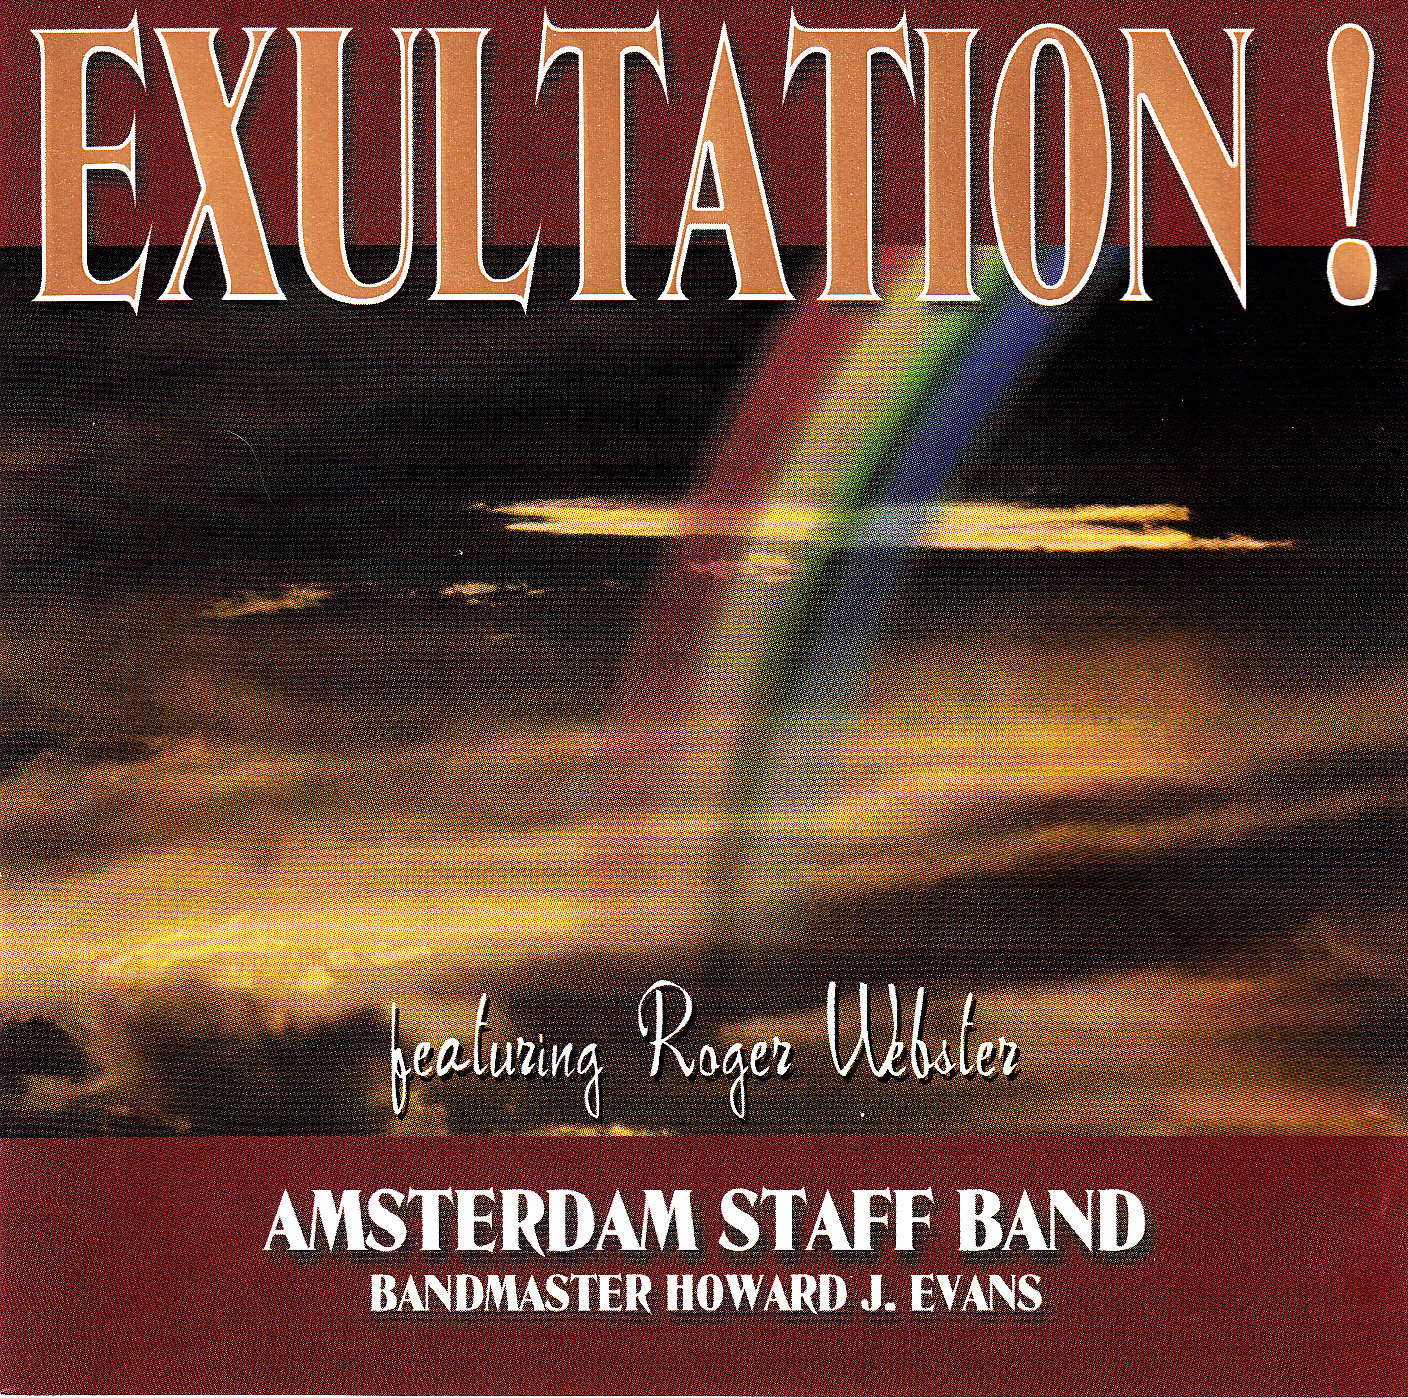 Amsterdam Staff Band - Exultation!